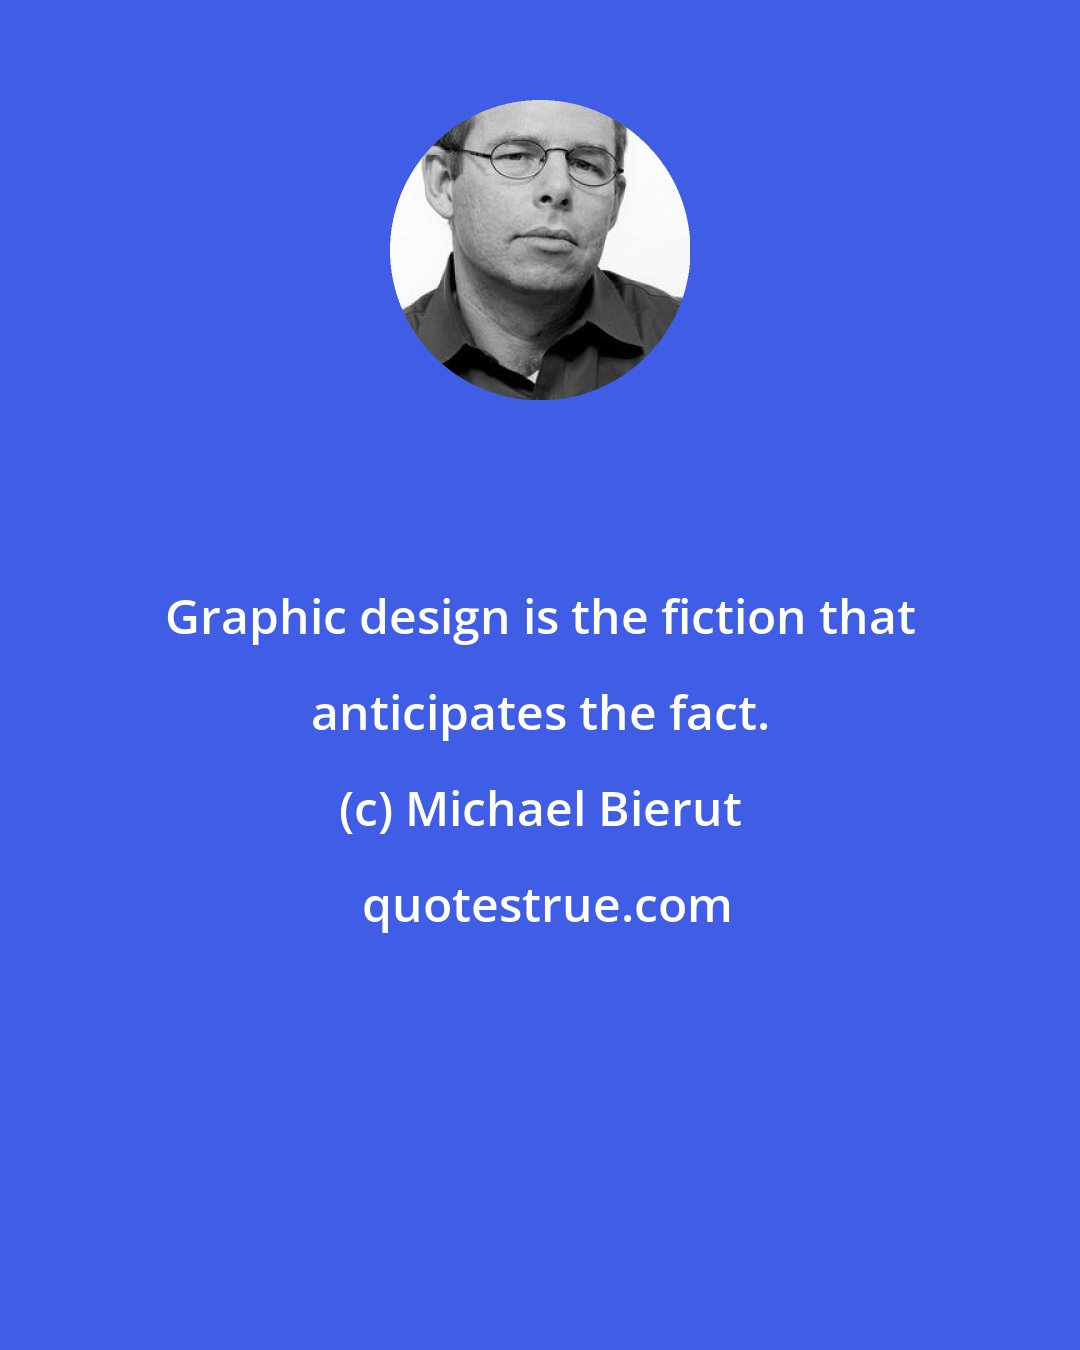 Michael Bierut: Graphic design is the fiction that anticipates the fact.